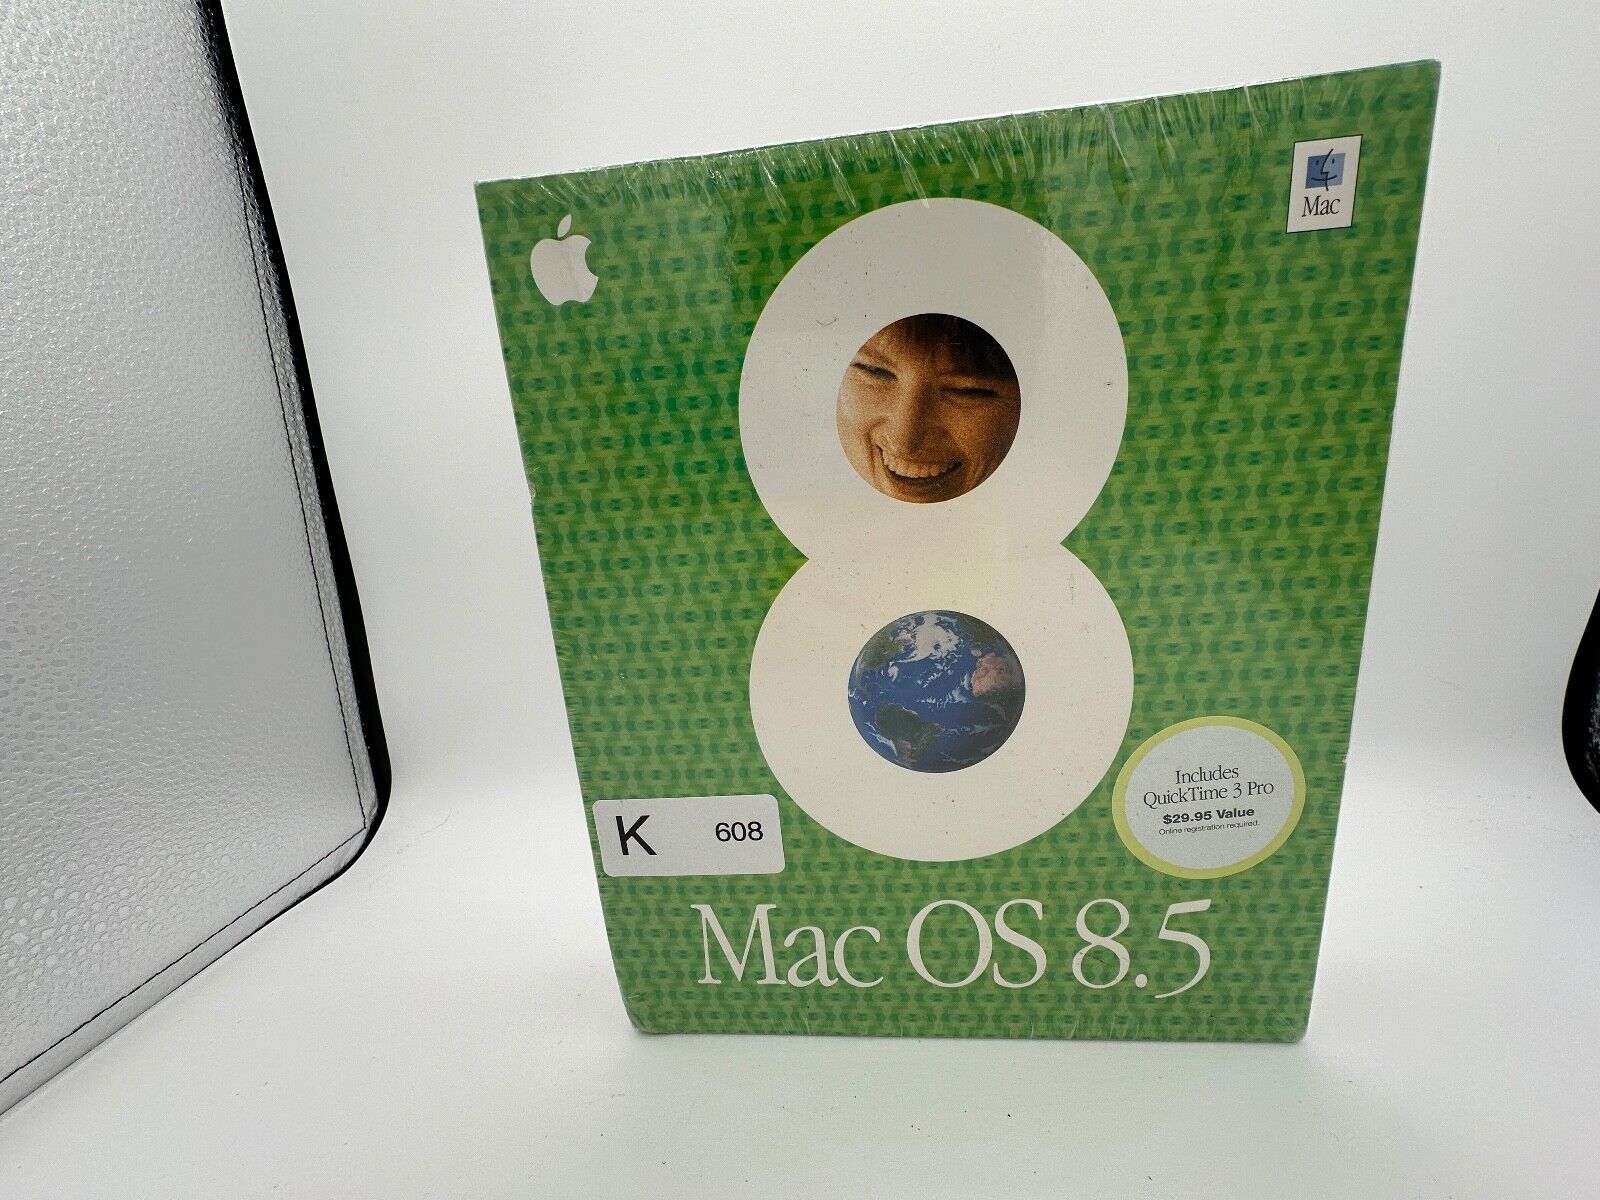 MAC OS 8.5 INCLUDES QUICKTIME 3 PRO NIB CD-ROM